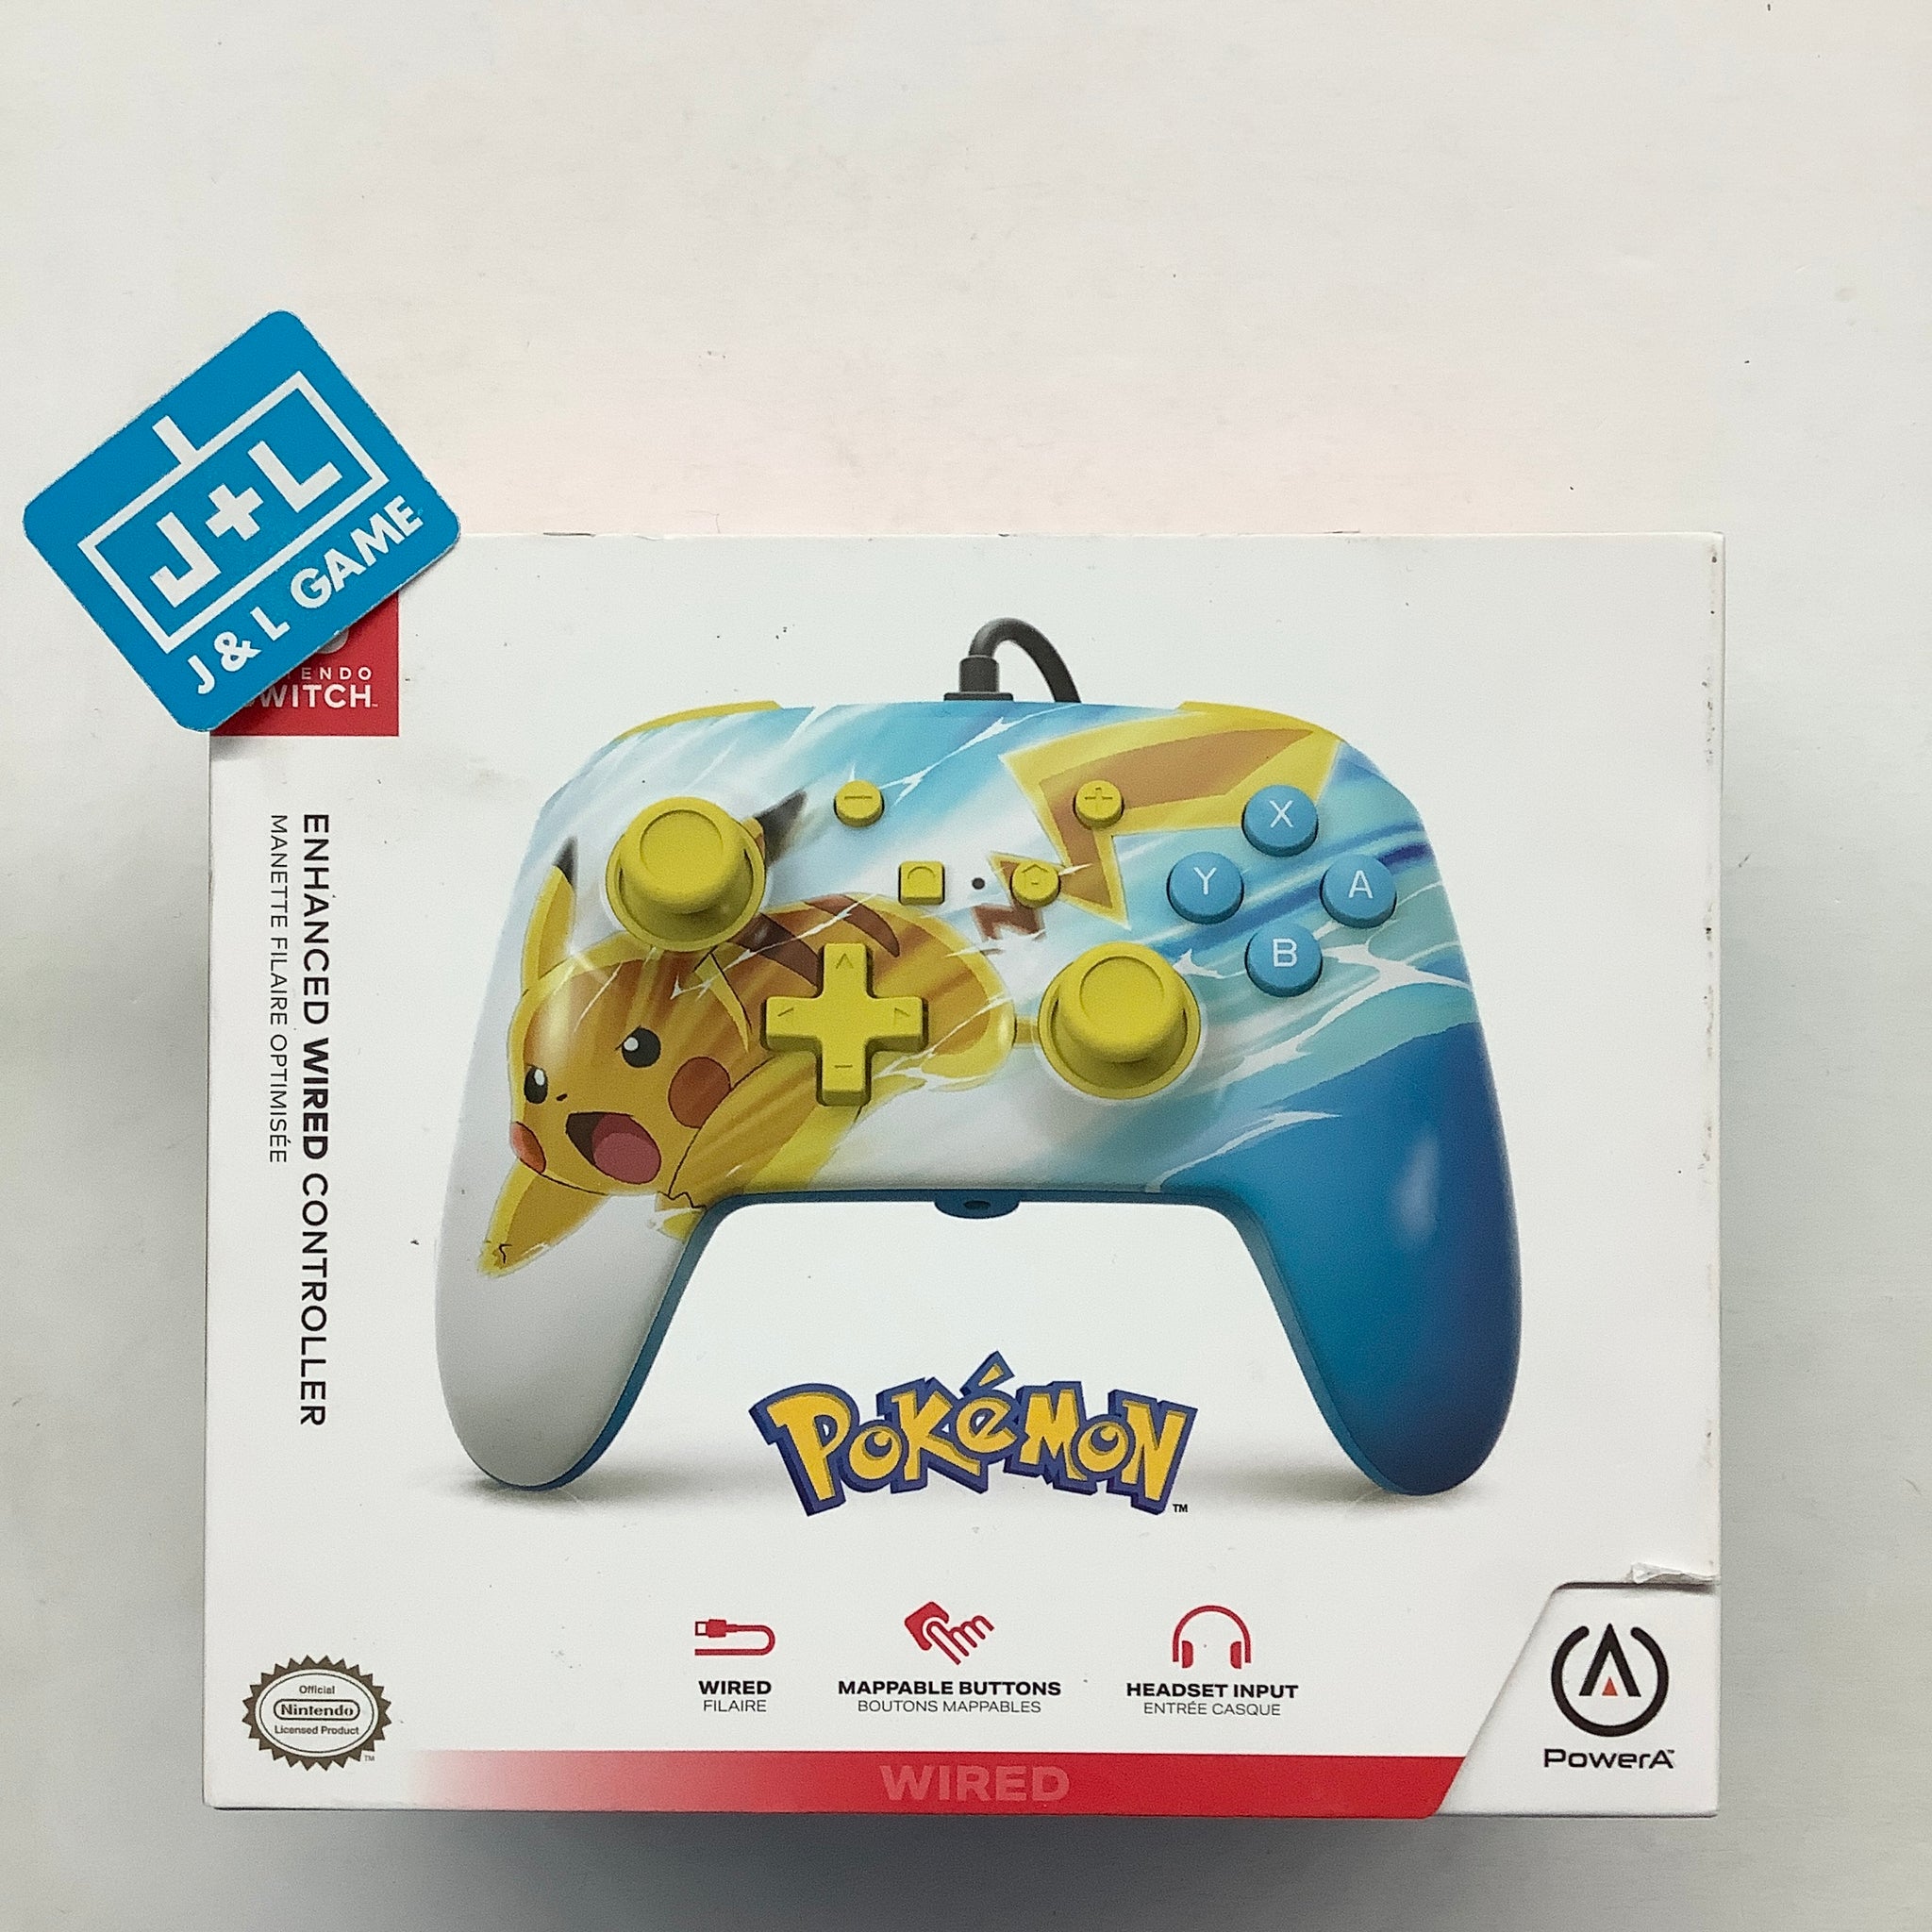 PowerA Nintendo Switch Pokémon Enhanced Wired Controller (Pikachu